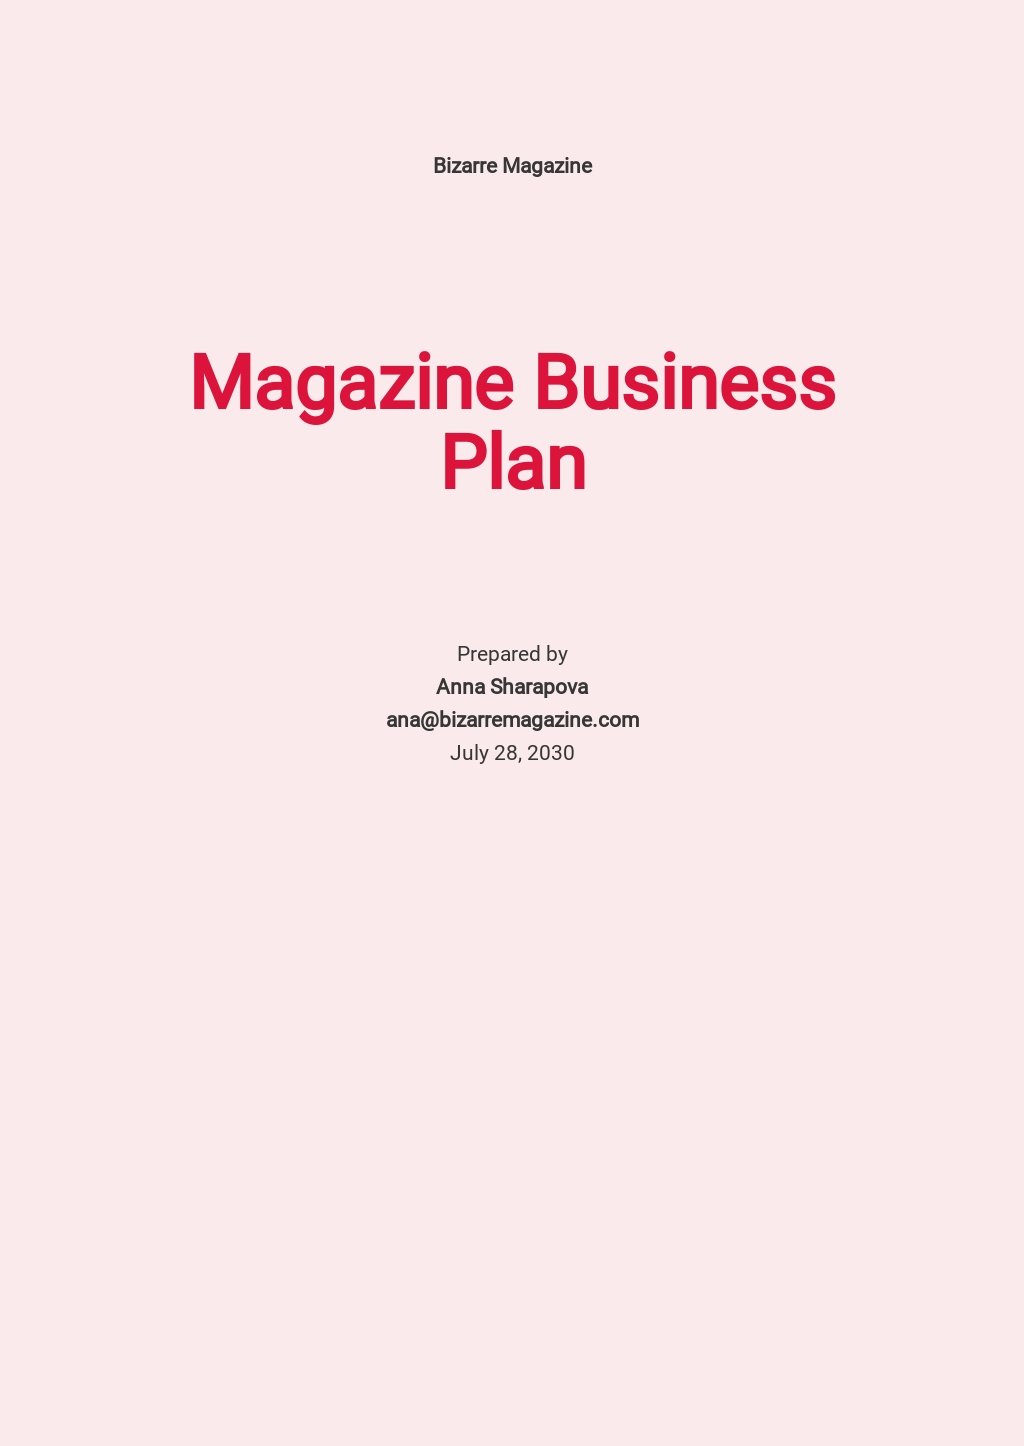 sample business plan for online magazine